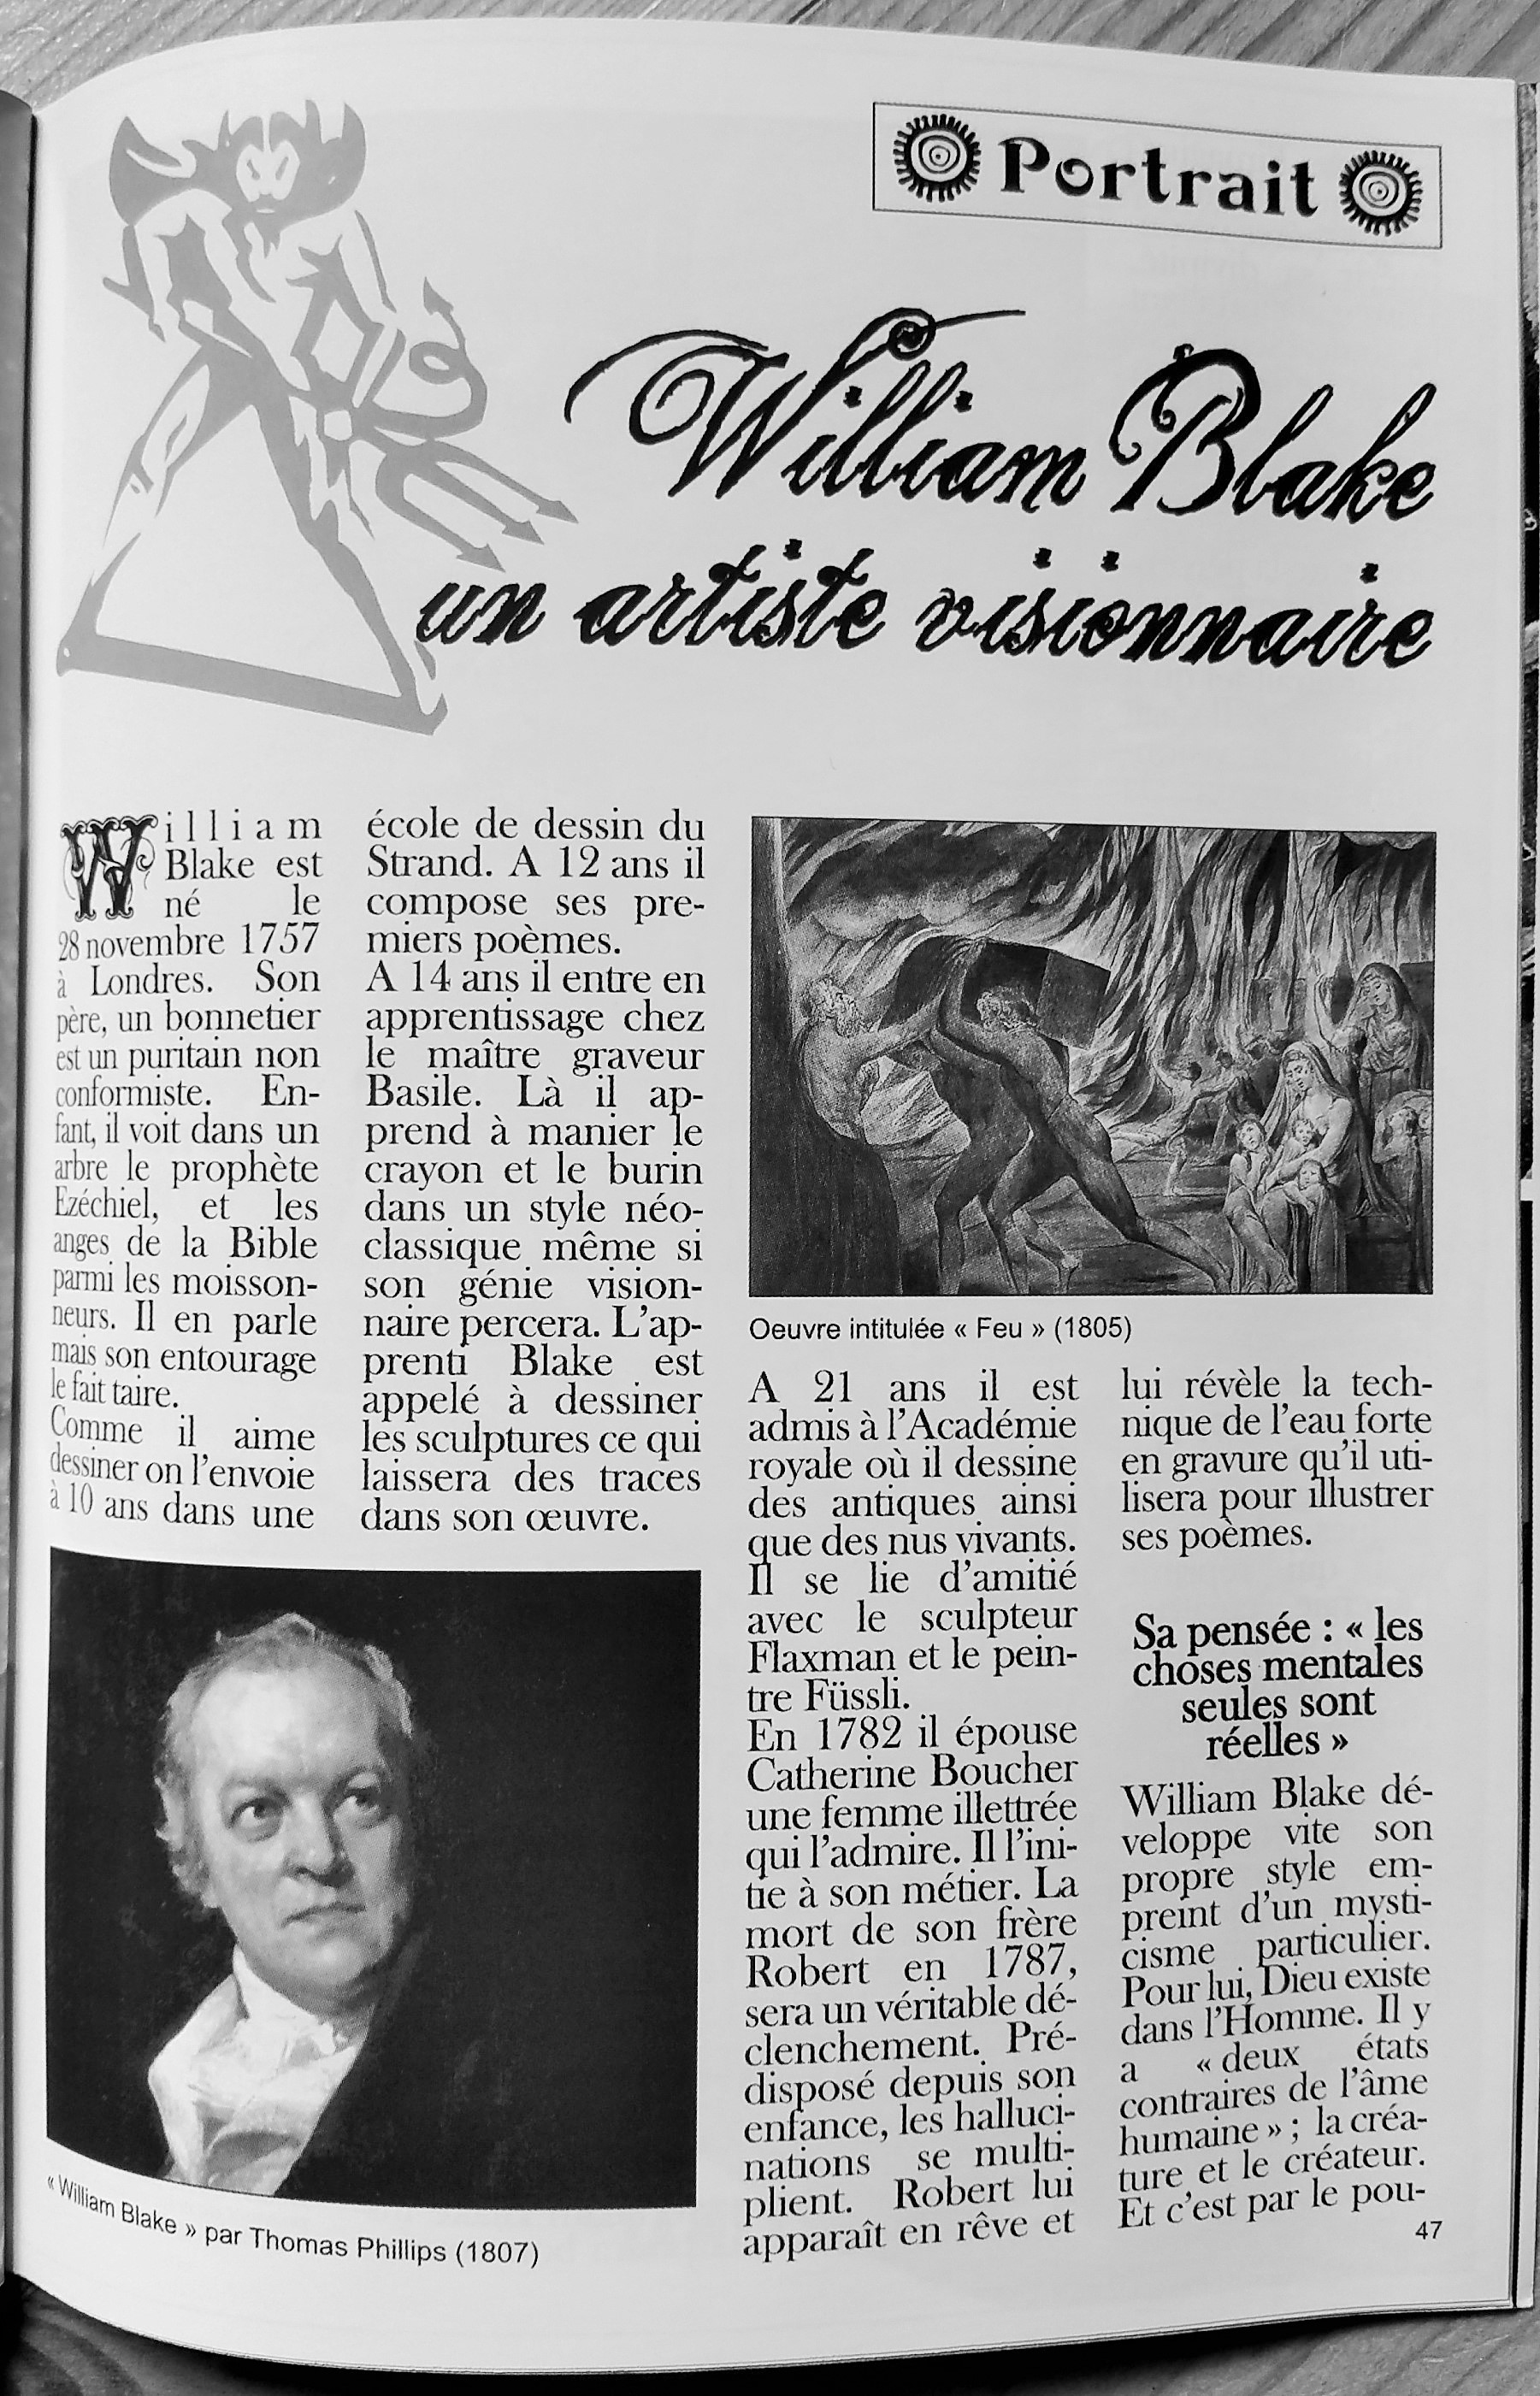 William Blake, un artiste visionnaire